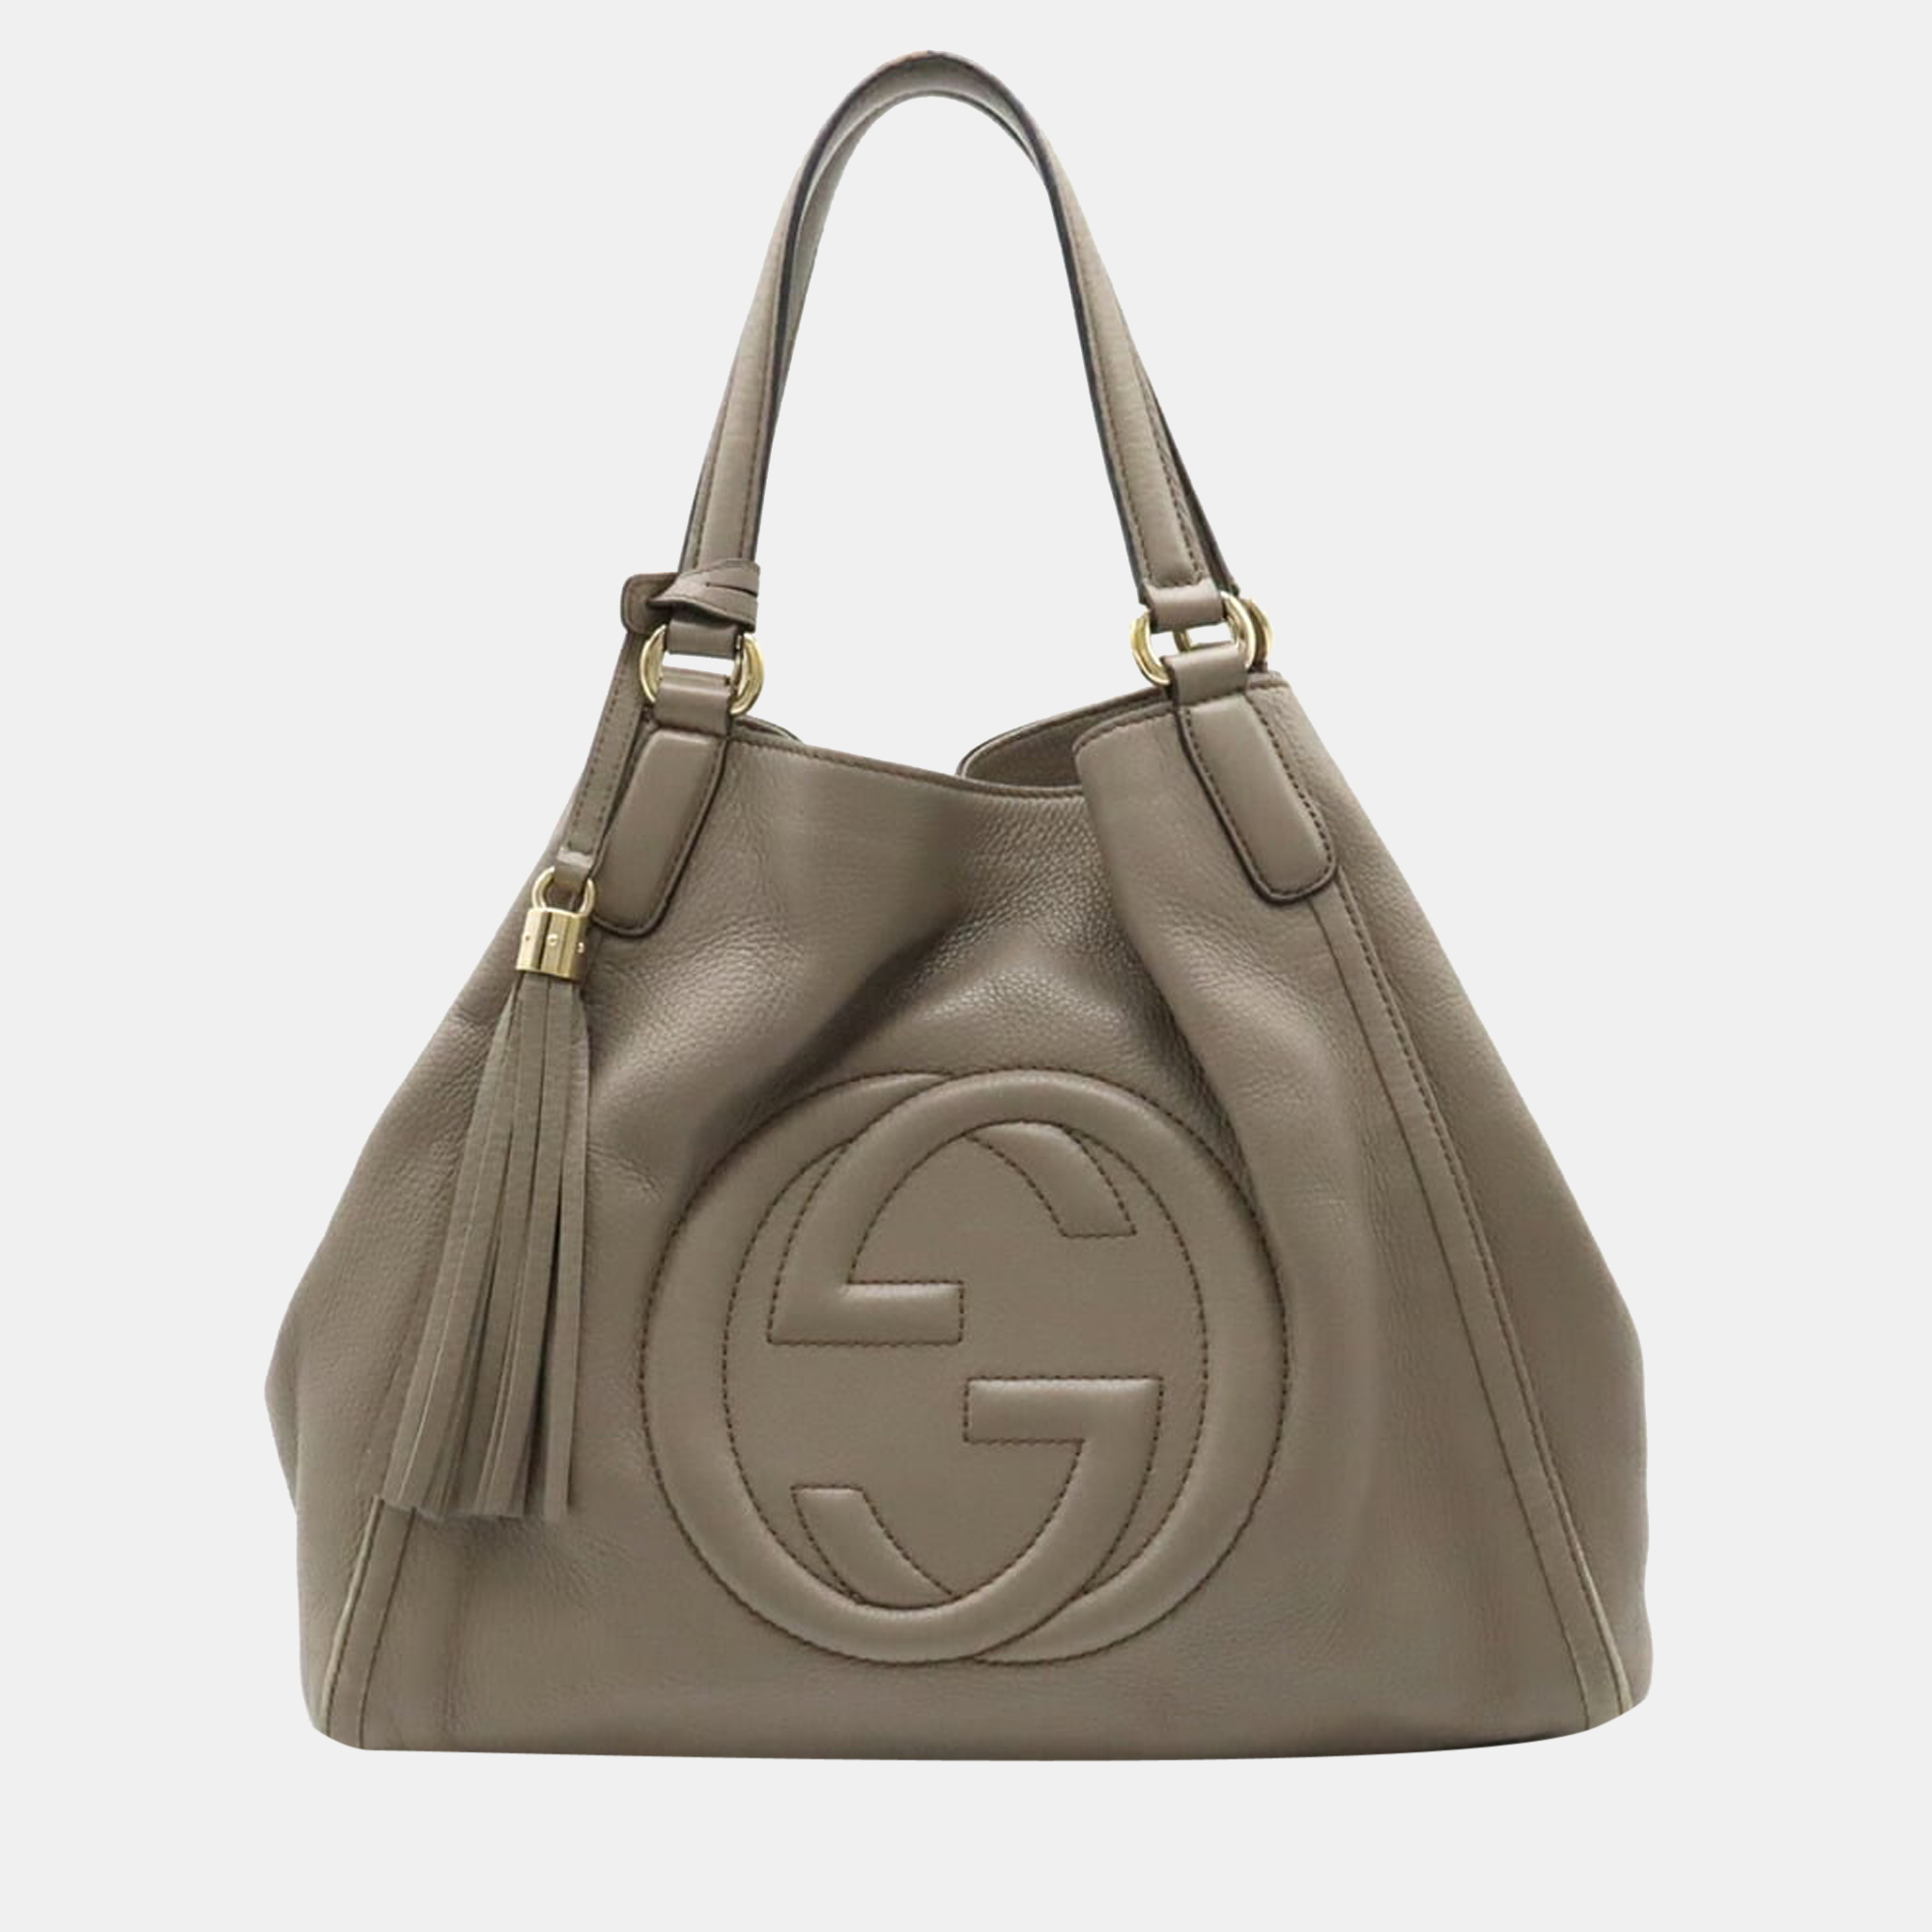 Gucci Grey Leather Medium Soho Cellarius Tote Bag Gucci | The Luxury Closet